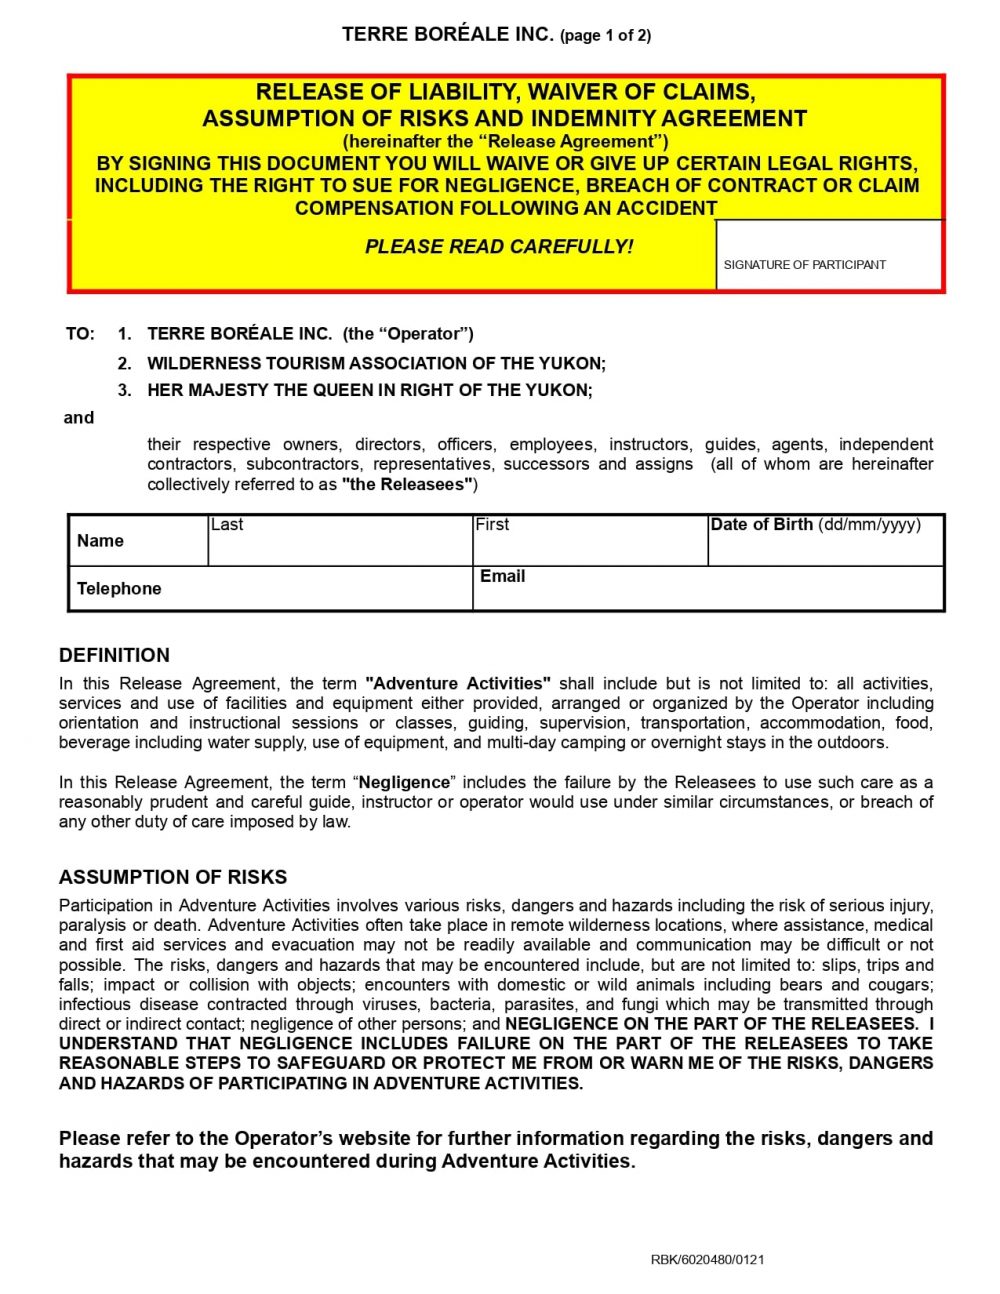 Terre Boréale Inc. RELEASE - WTAY - ADVENTURE ACTIVITIES - JAN 2021.docx_page-0001